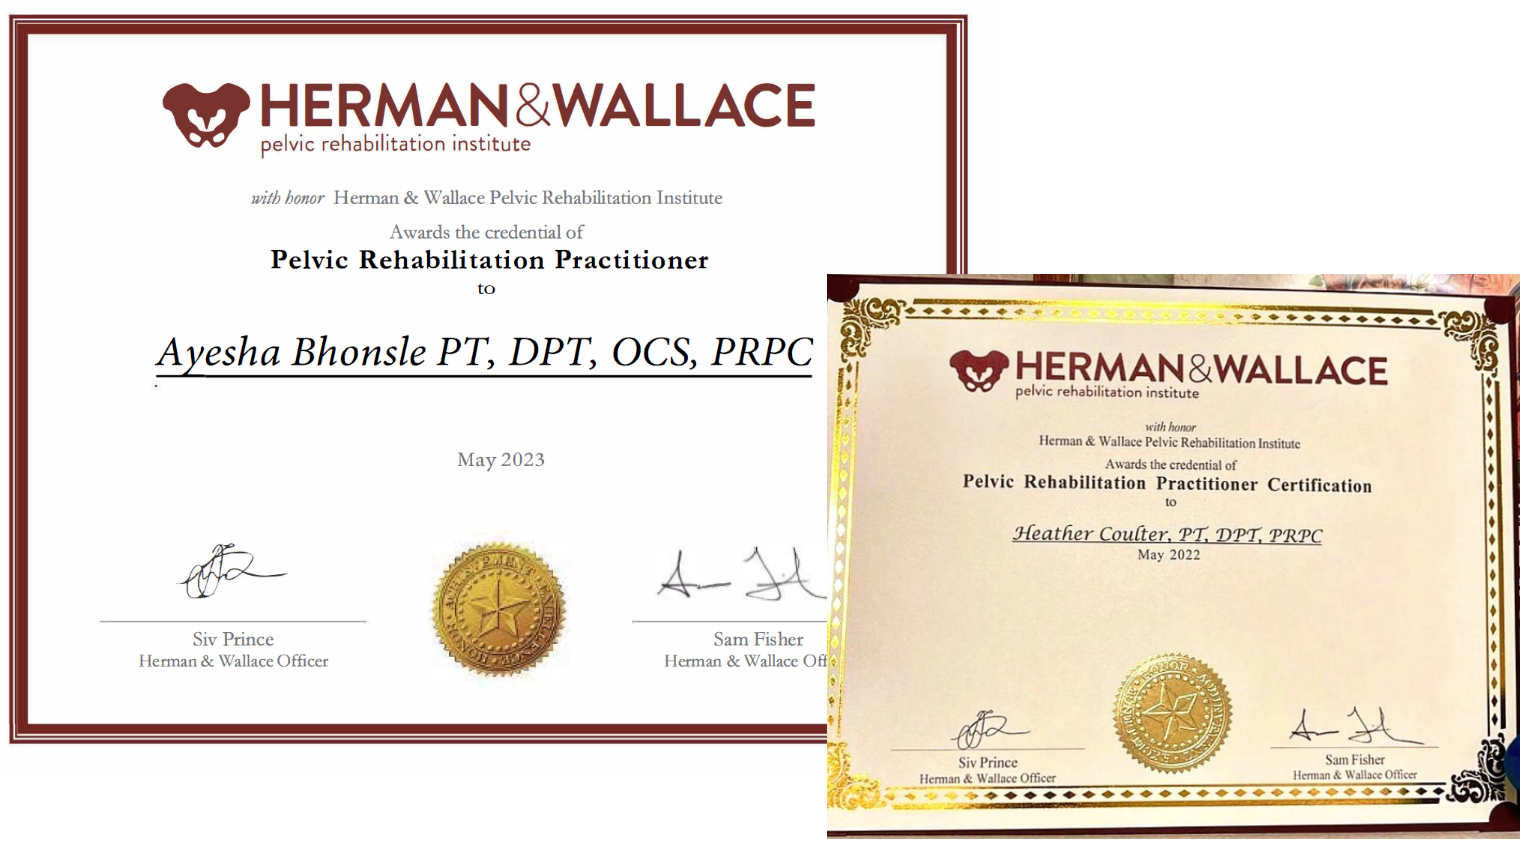 Herman & Wallace Pelvic Rehabilitation Continuing Education